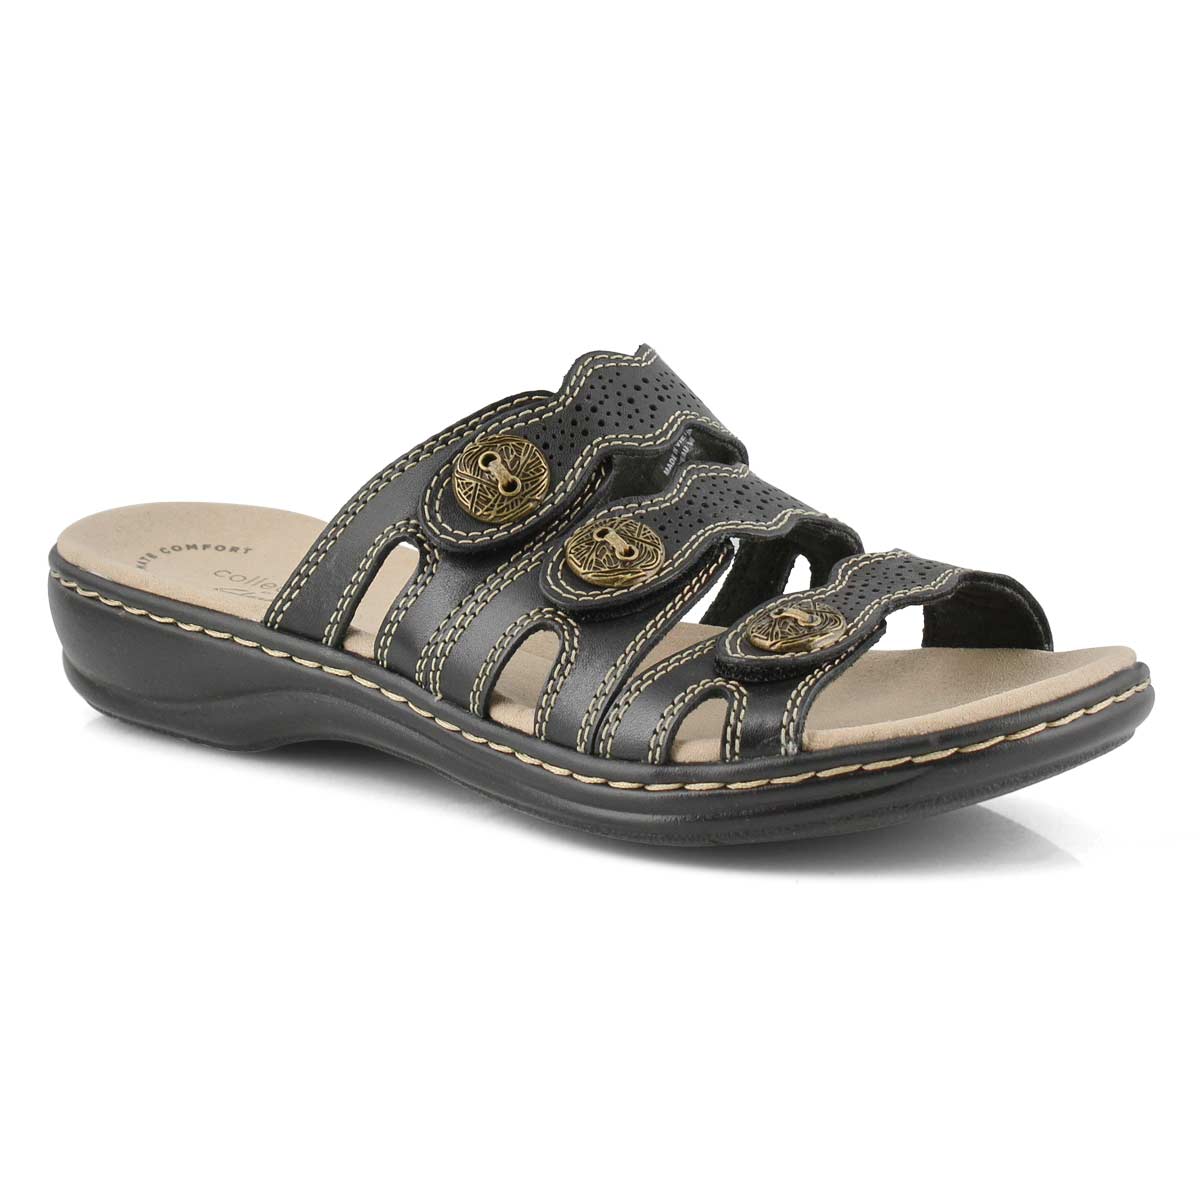 clarks womens sandals canada